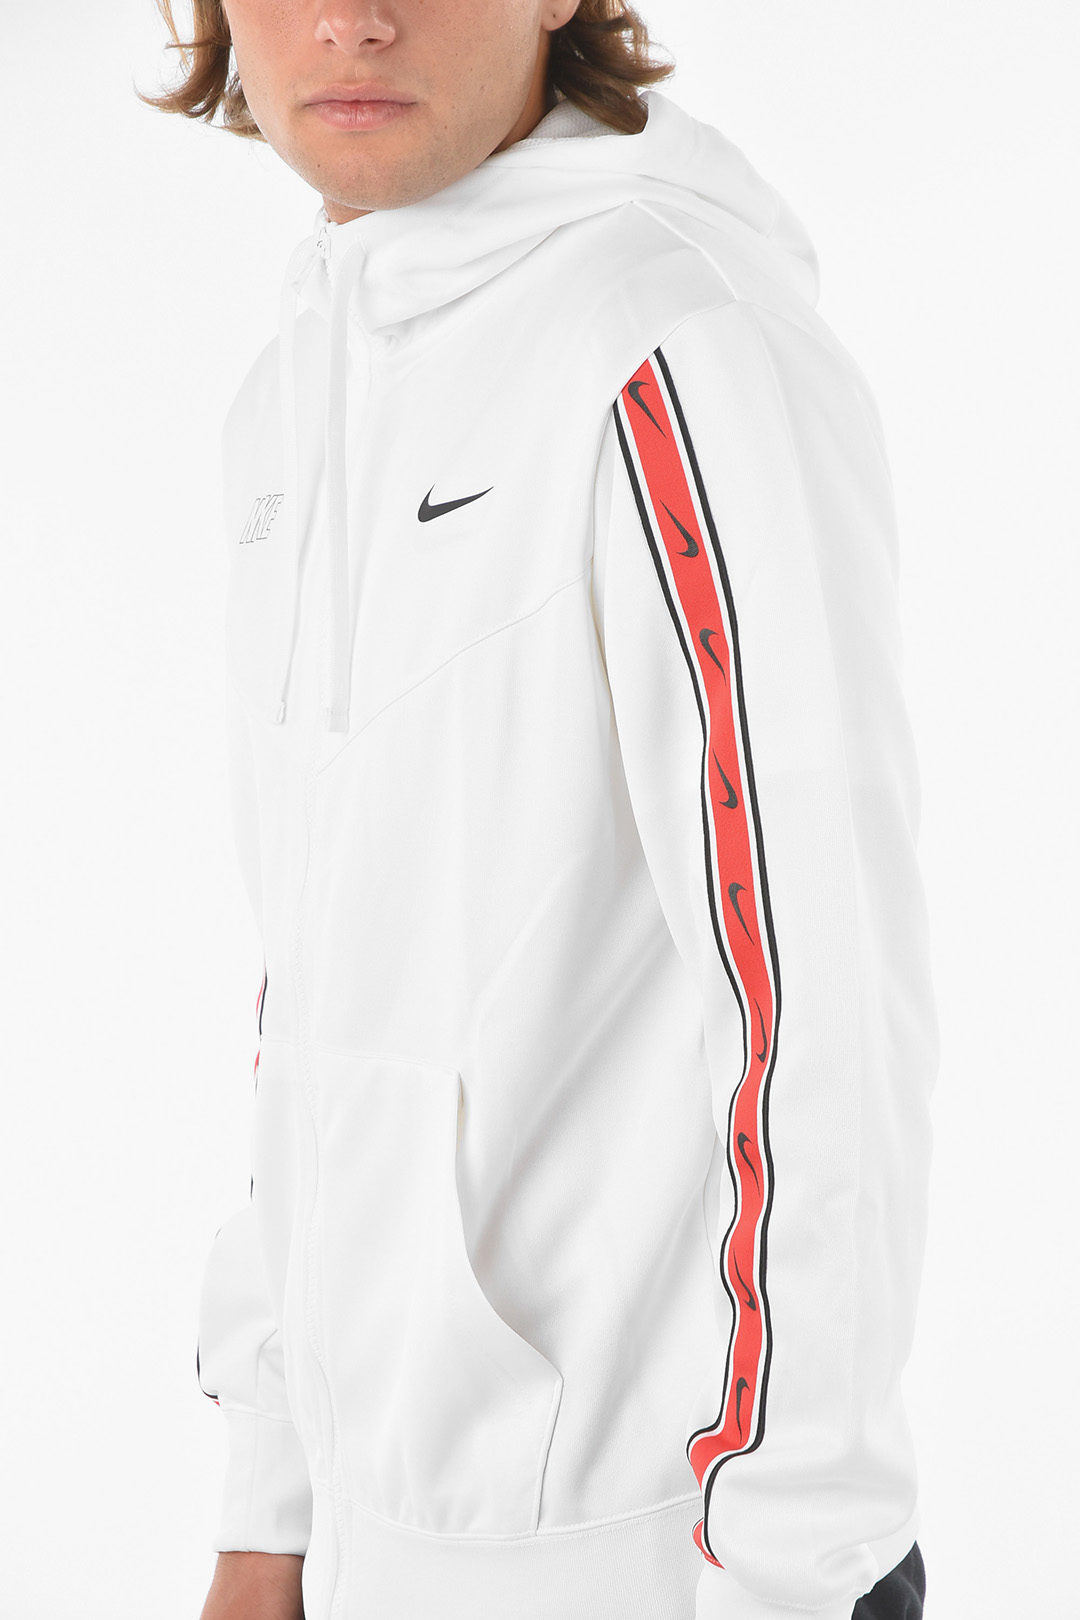 Nike Logoed Side Band 2 Pockets Sweatshirt men - Glamood